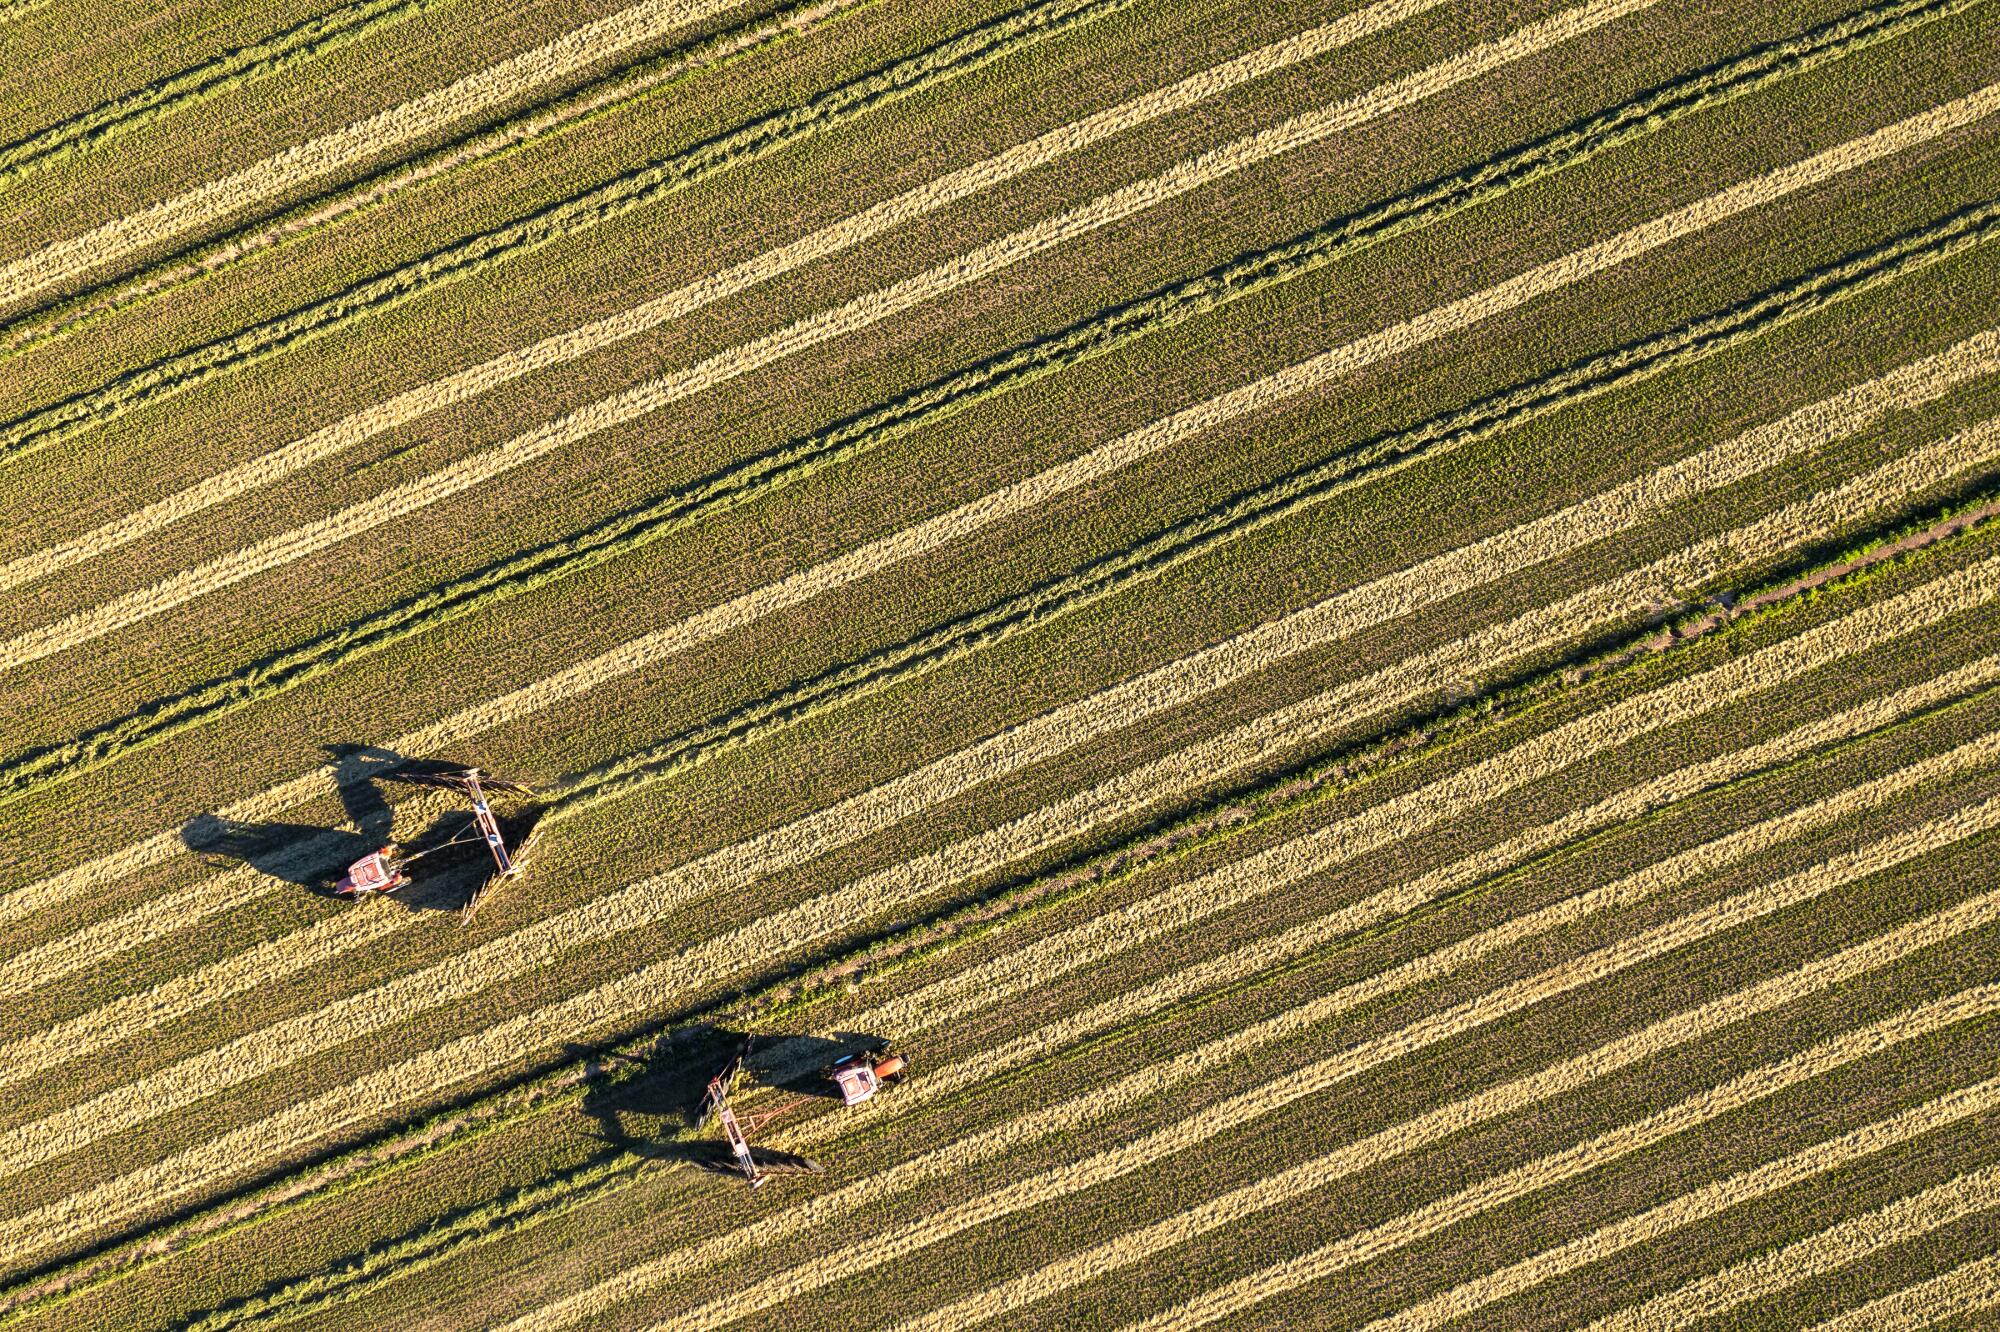 An aerial view of farm machinery harvesting alfalfa.